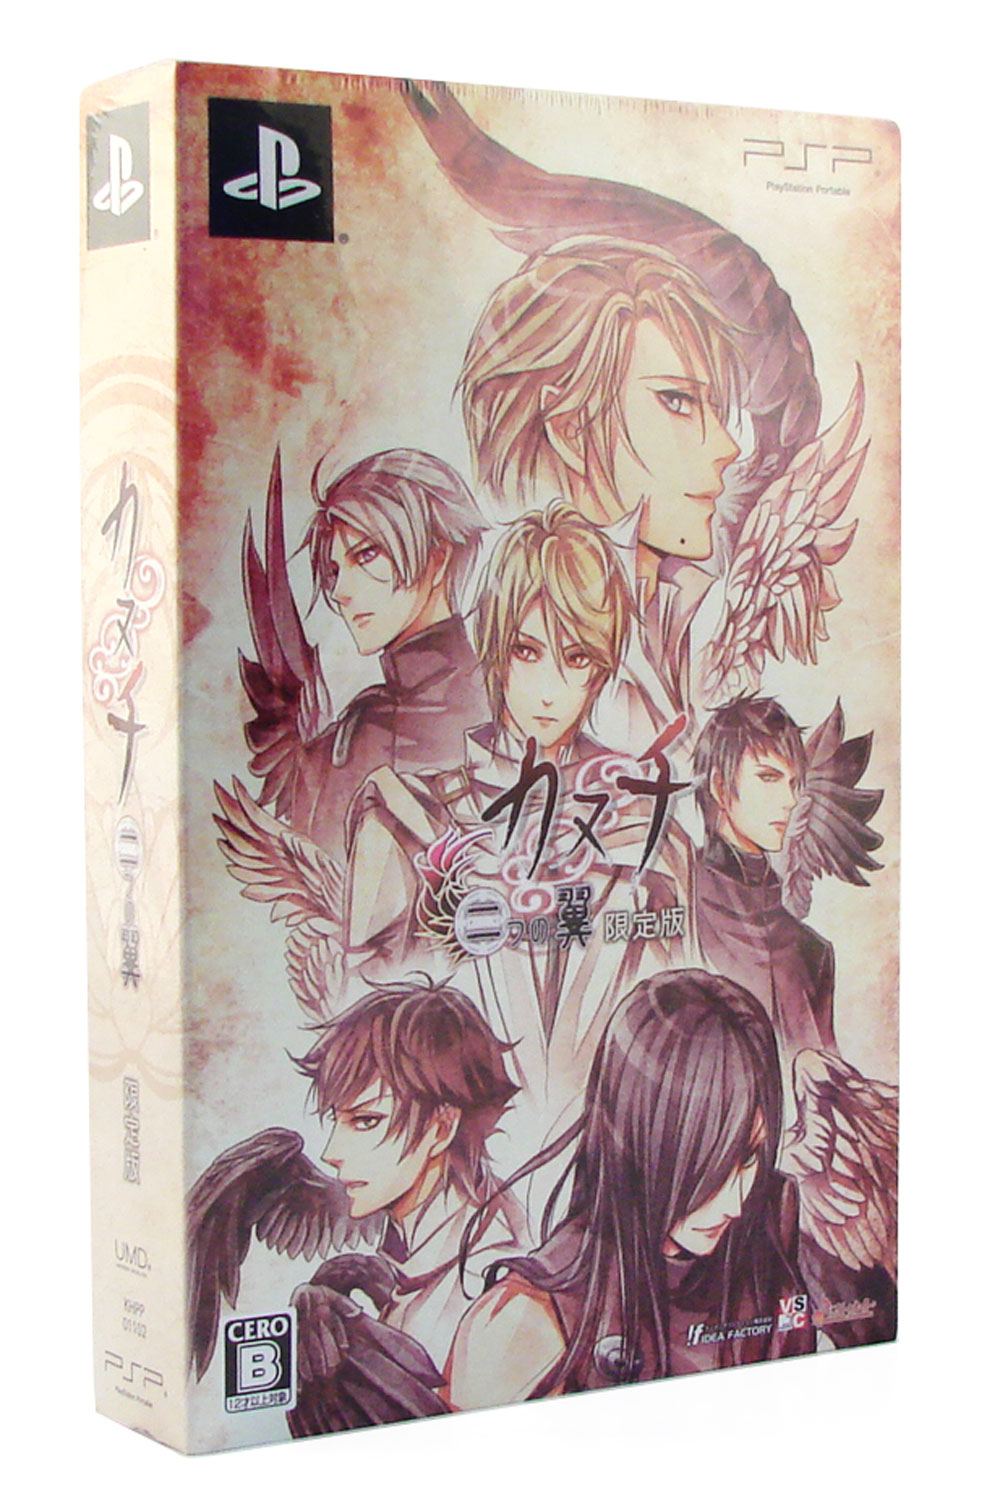 Buy Kanuchi: Futatsu no Tsubasa [Limited Edition] for Sony PSP